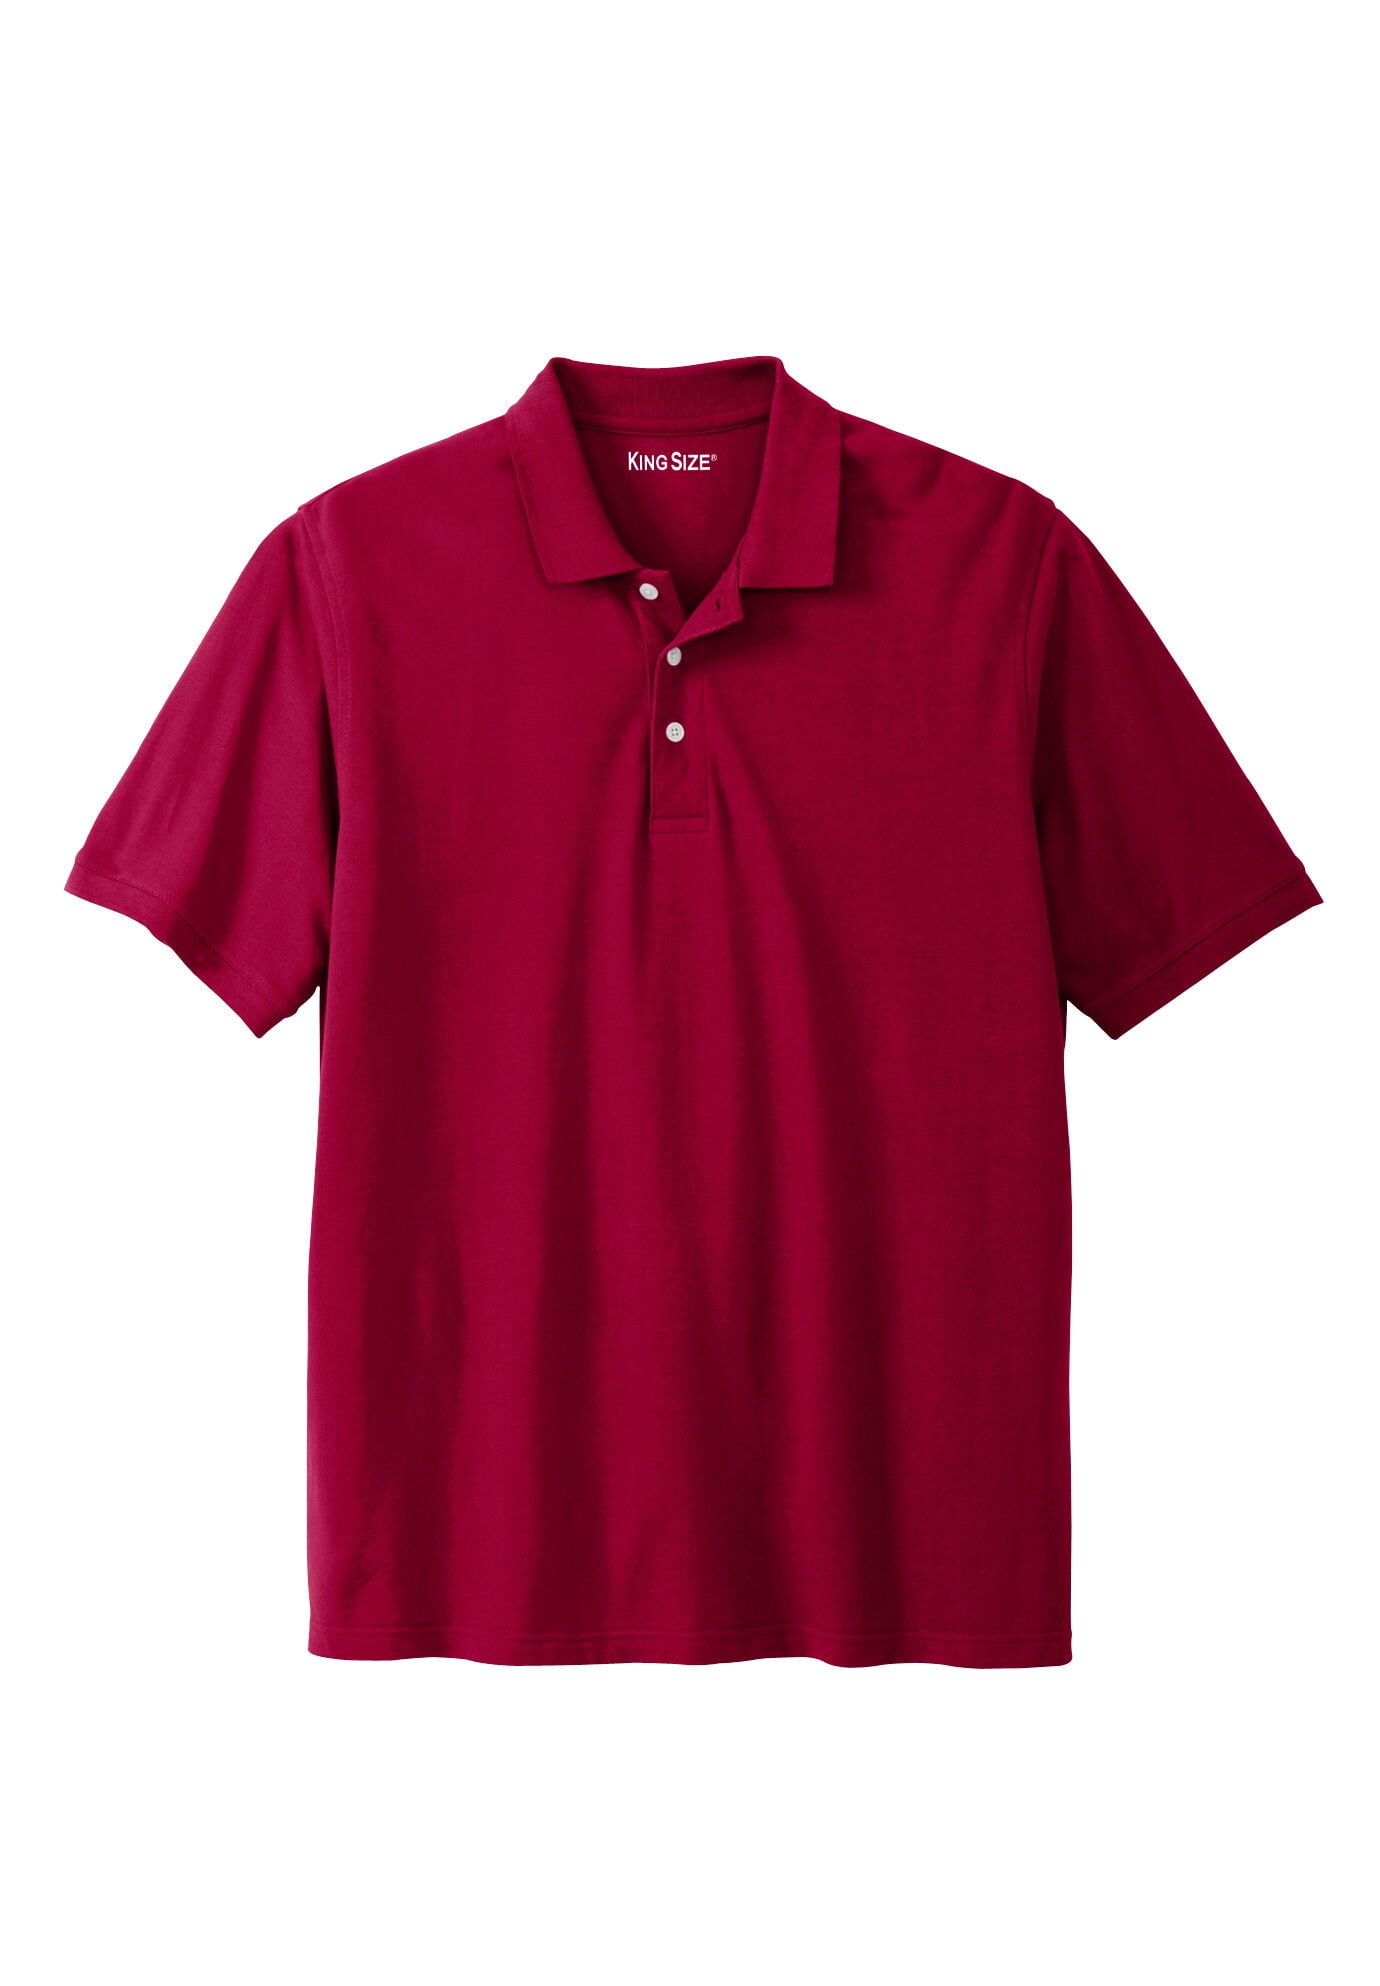 Kingsize Men's Big & Tall Piqué Polo Shirt - Walmart.com